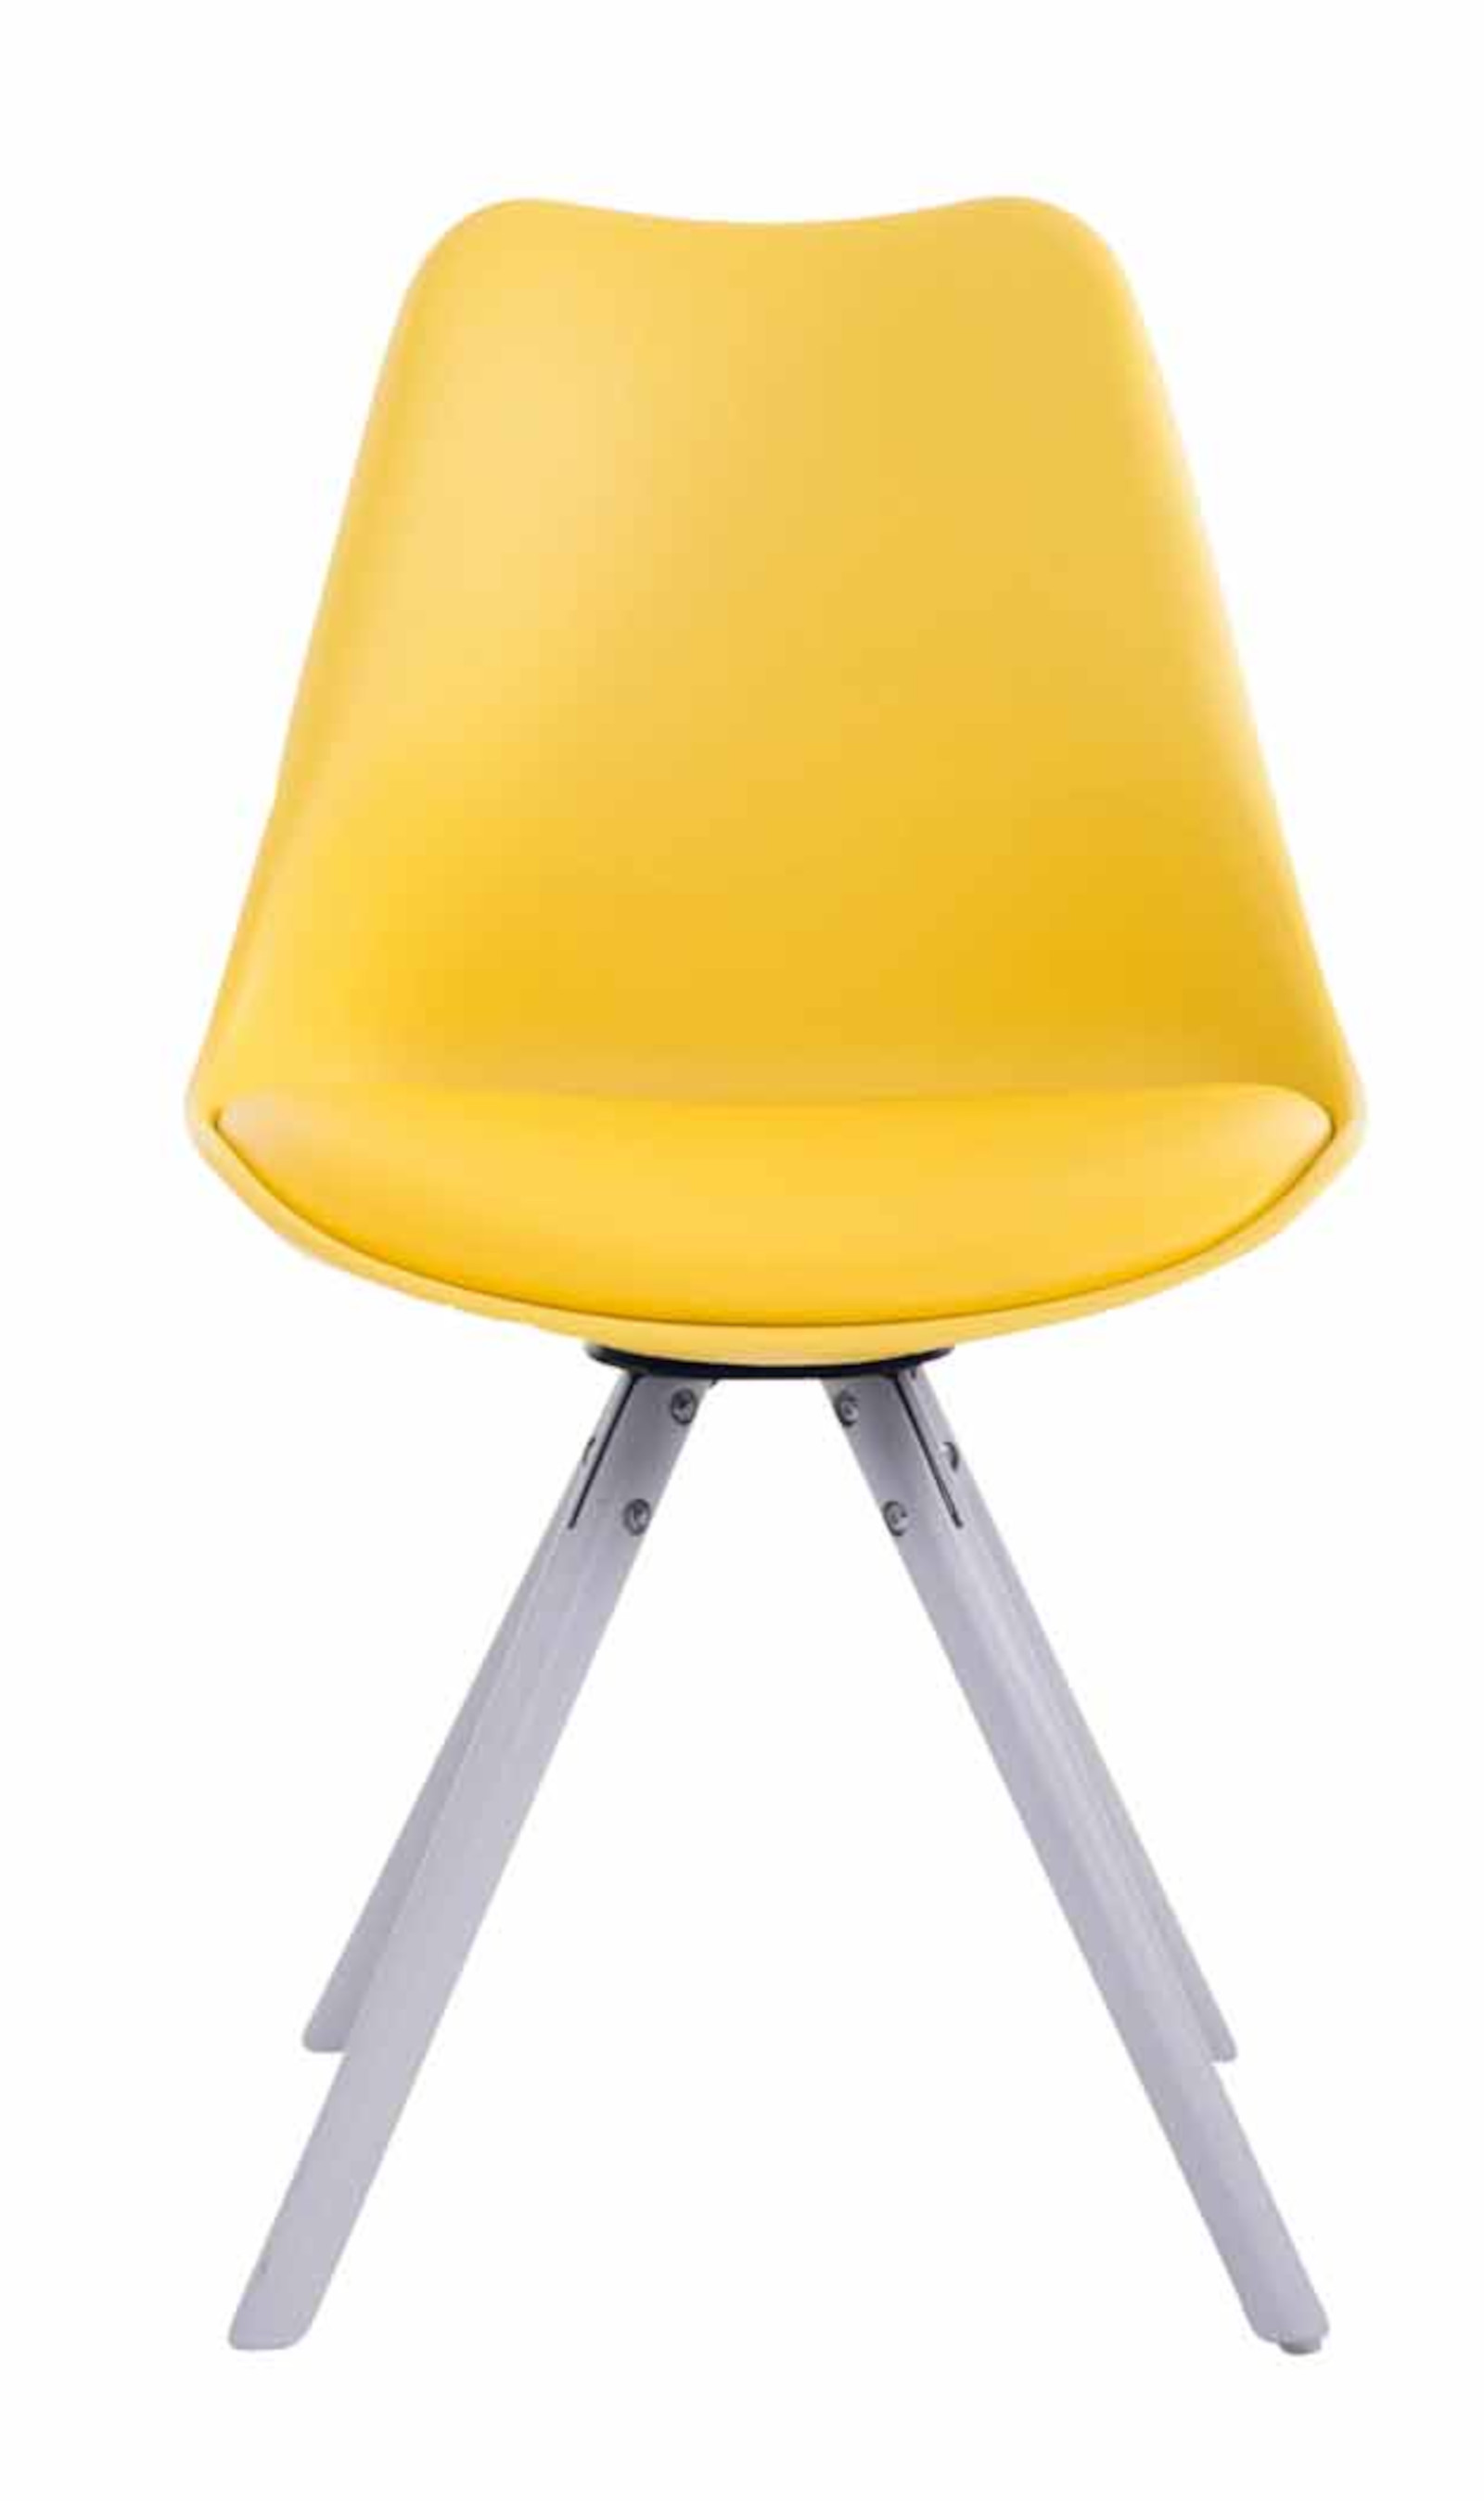 4er Set Stühle Toulouse Kunstleder Rund gelb weiß